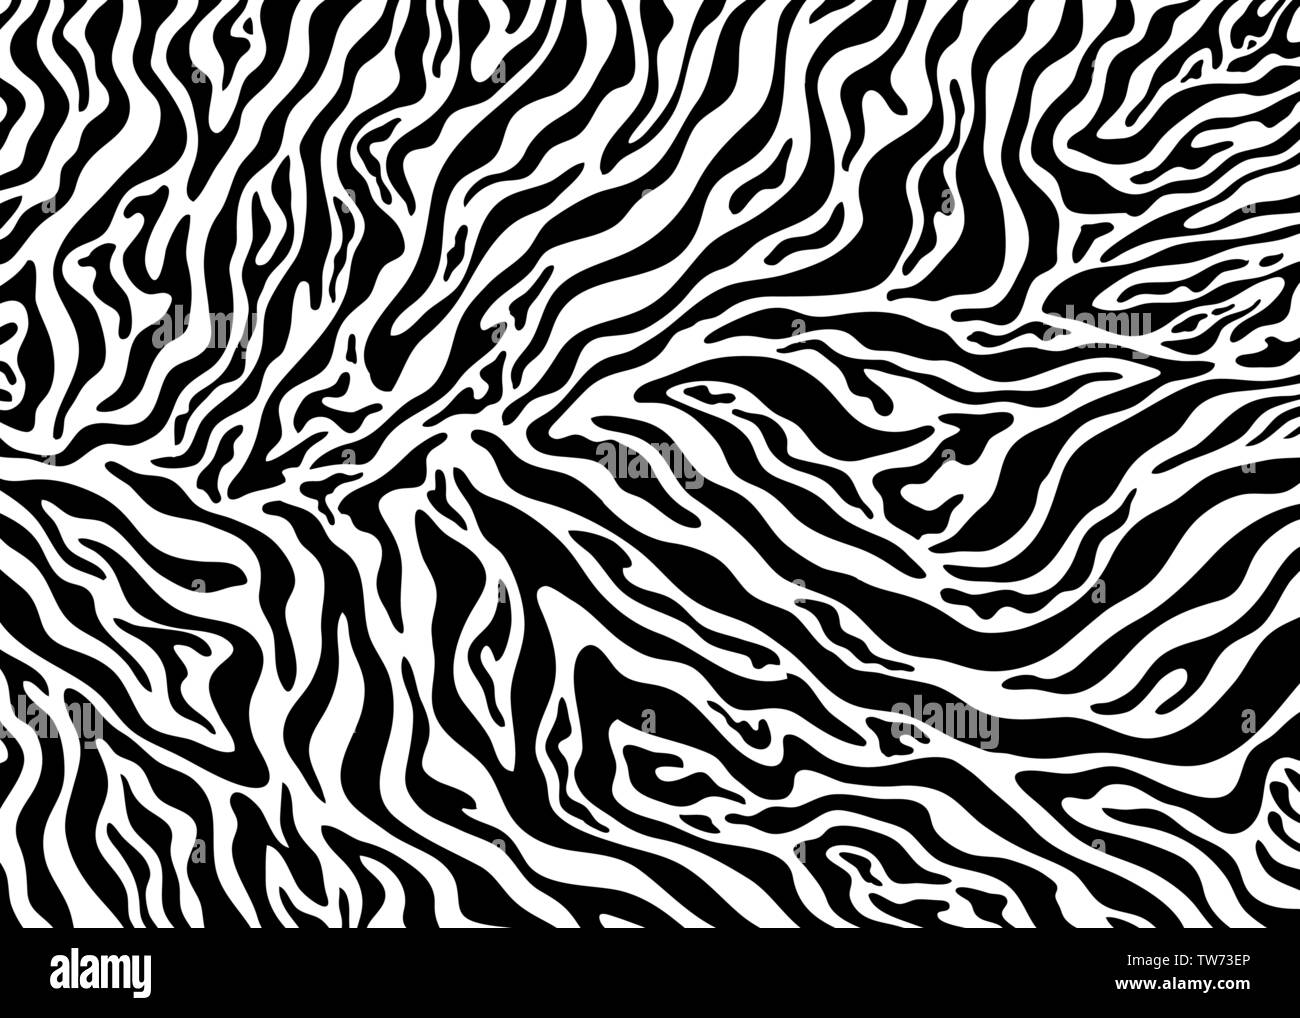 Zebra skin pattern design. Abstract animal print vector illustration background. Wildlife fur skin design illustration. For web, home decor, fashion, Stock Vector